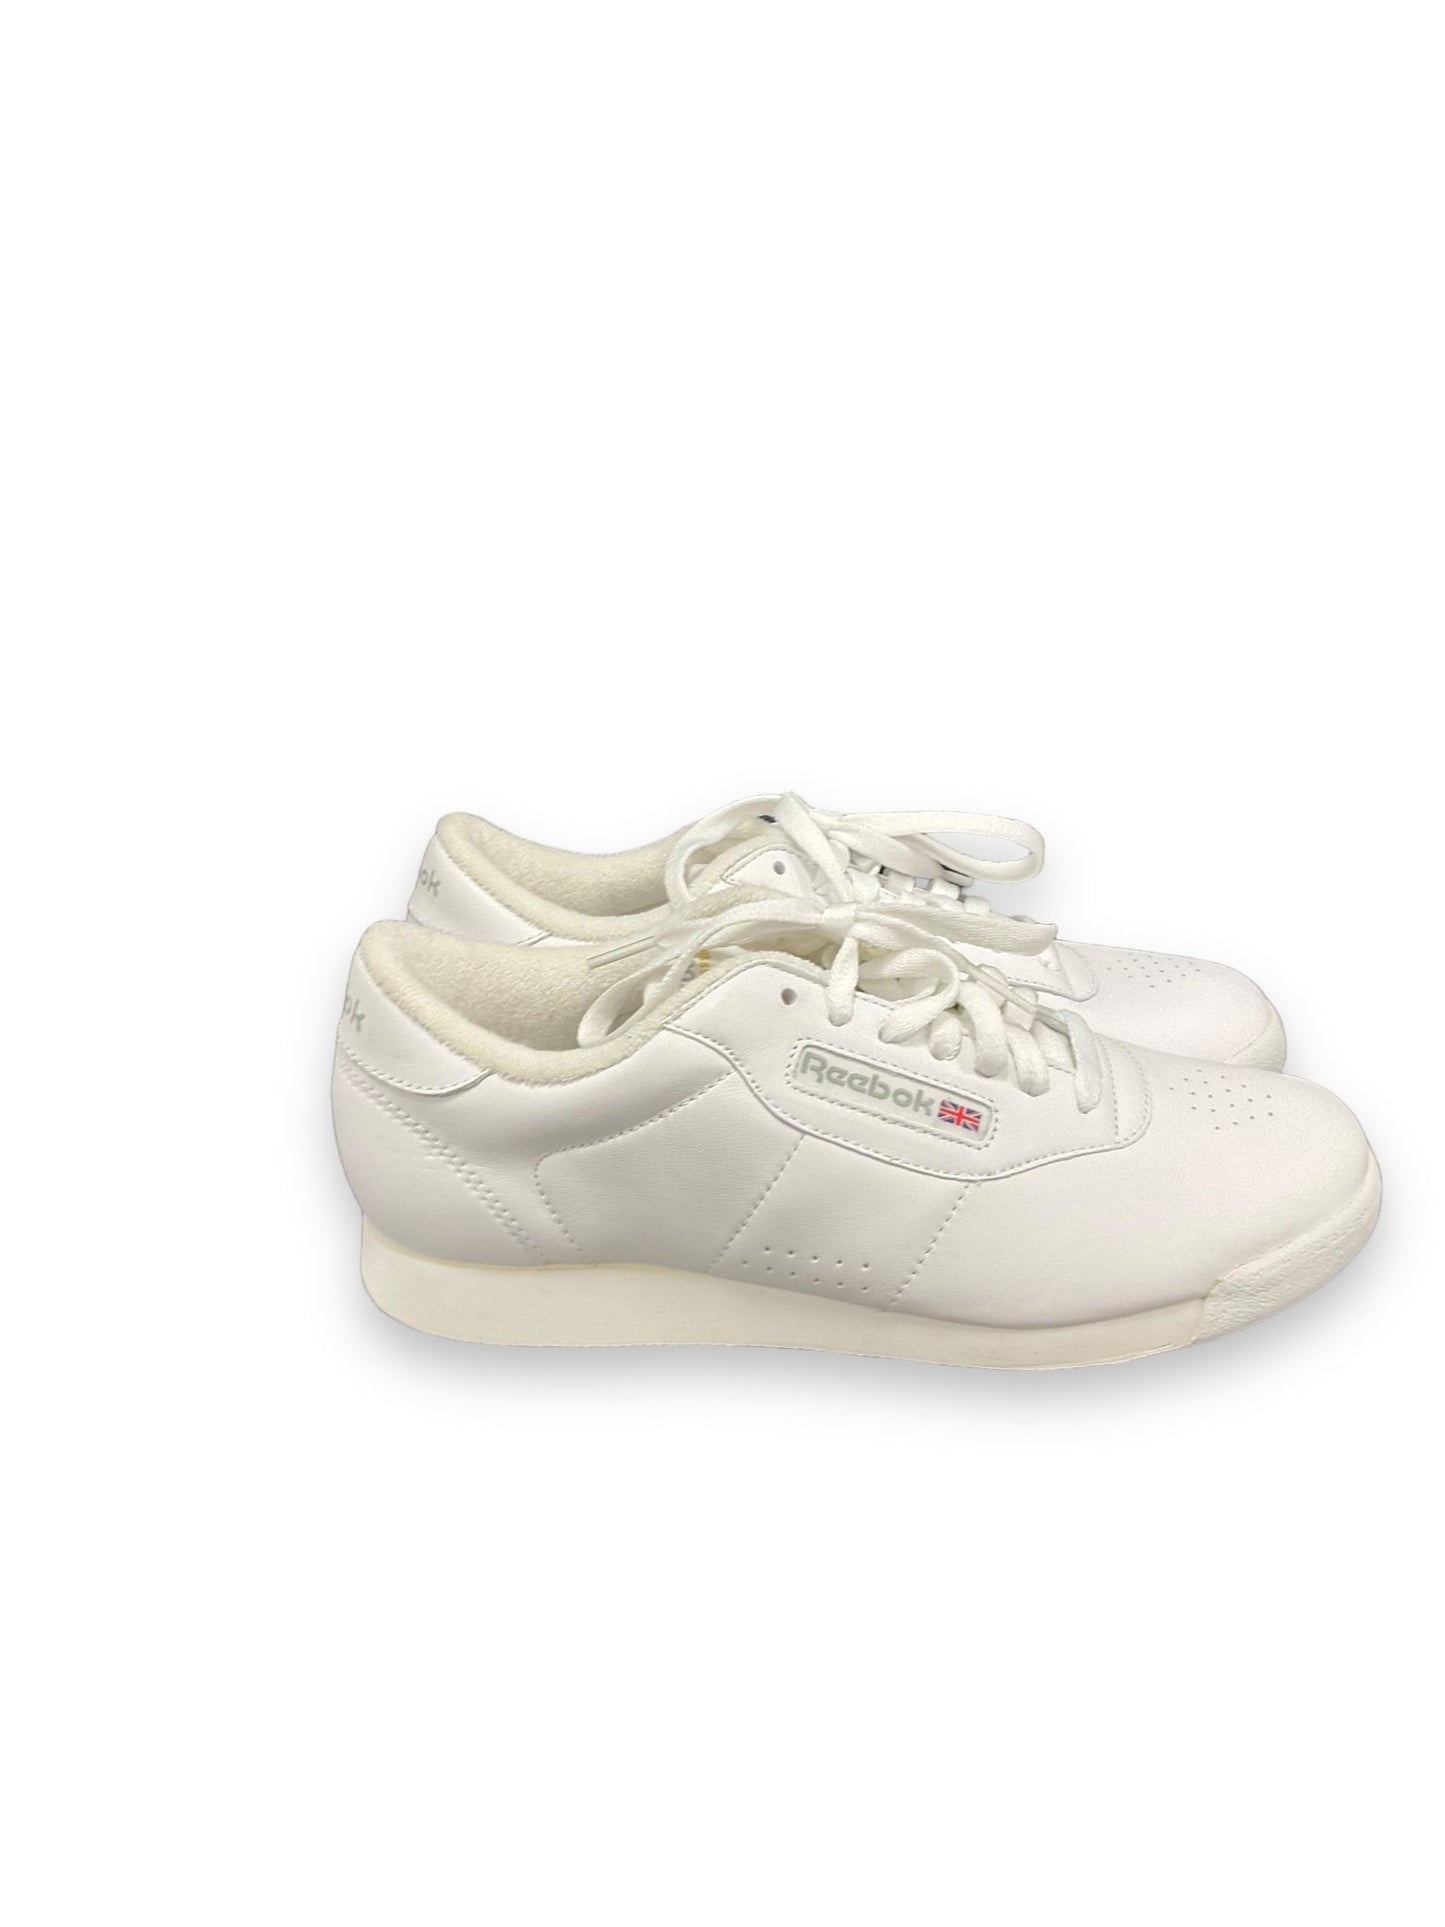 White Shoes Athletic Reebok, Size 8.5